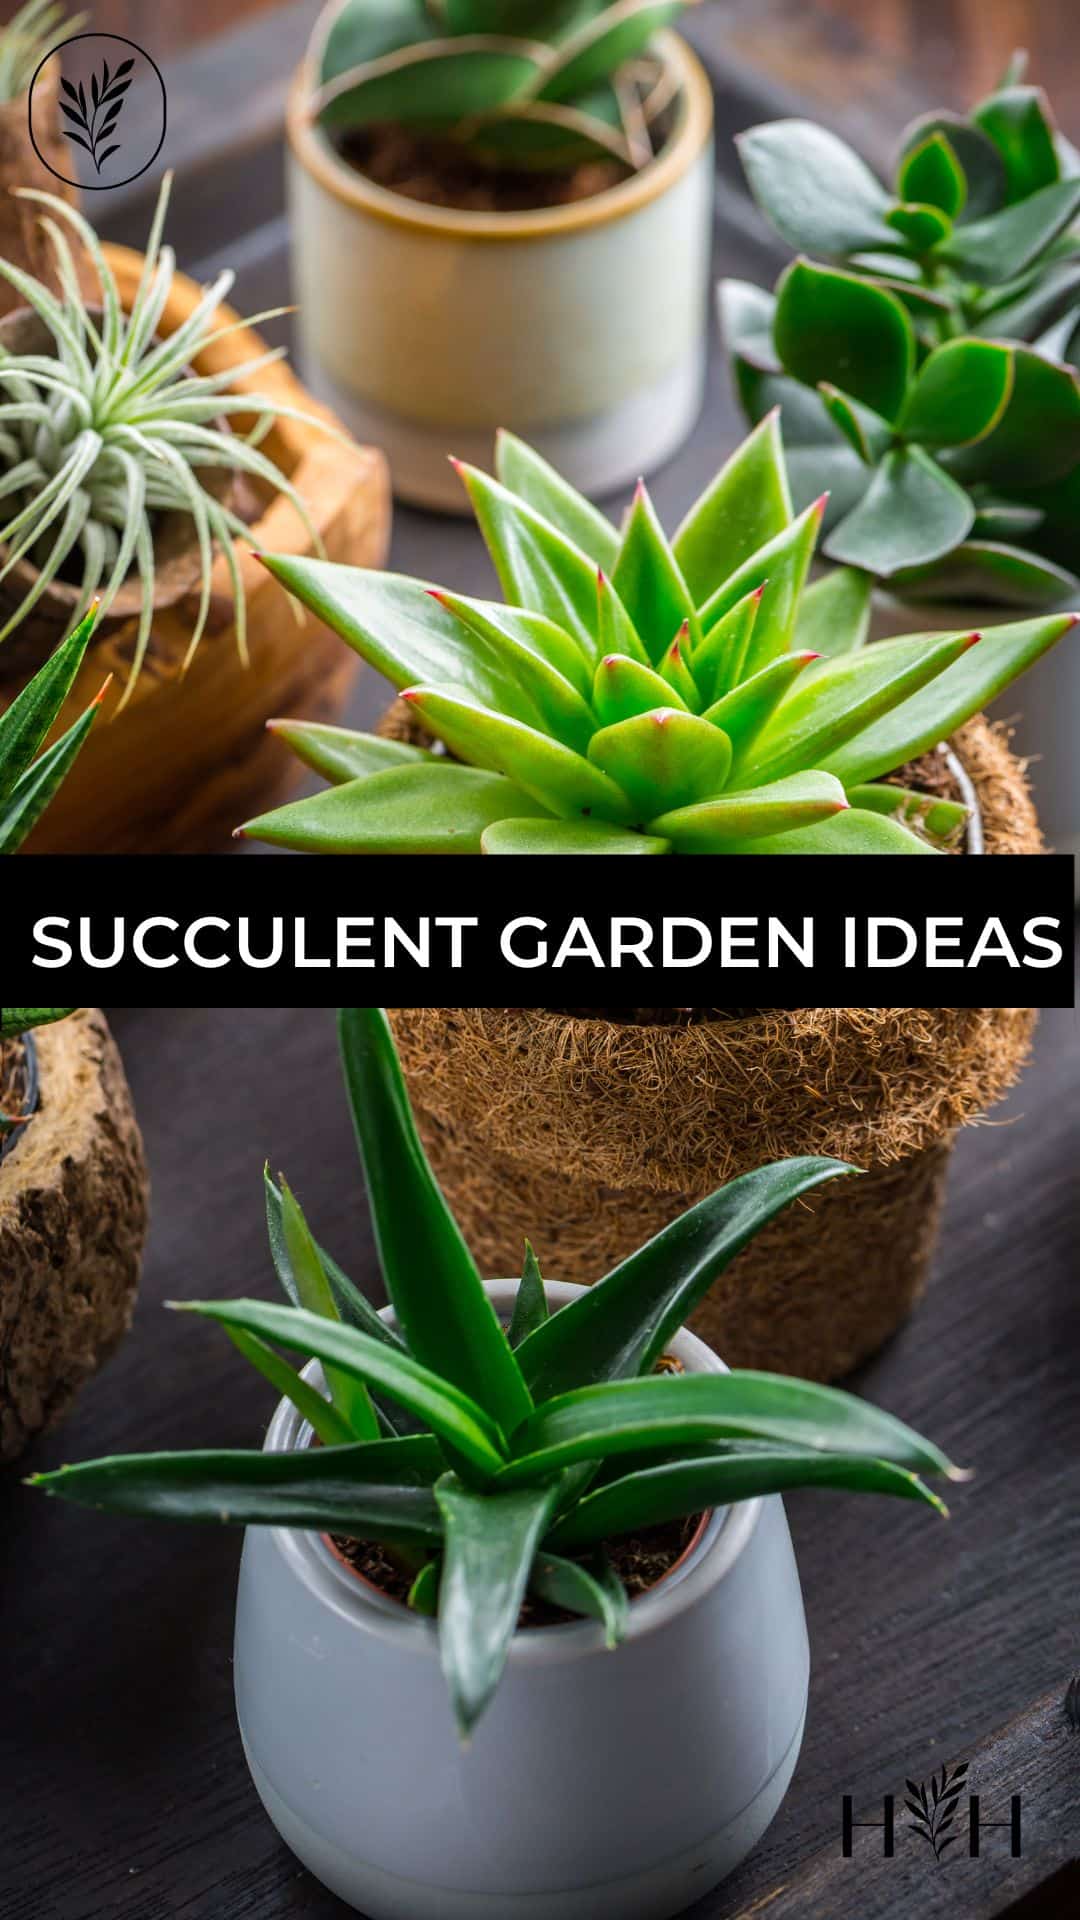 Succulent garden ideas via @home4theharvest